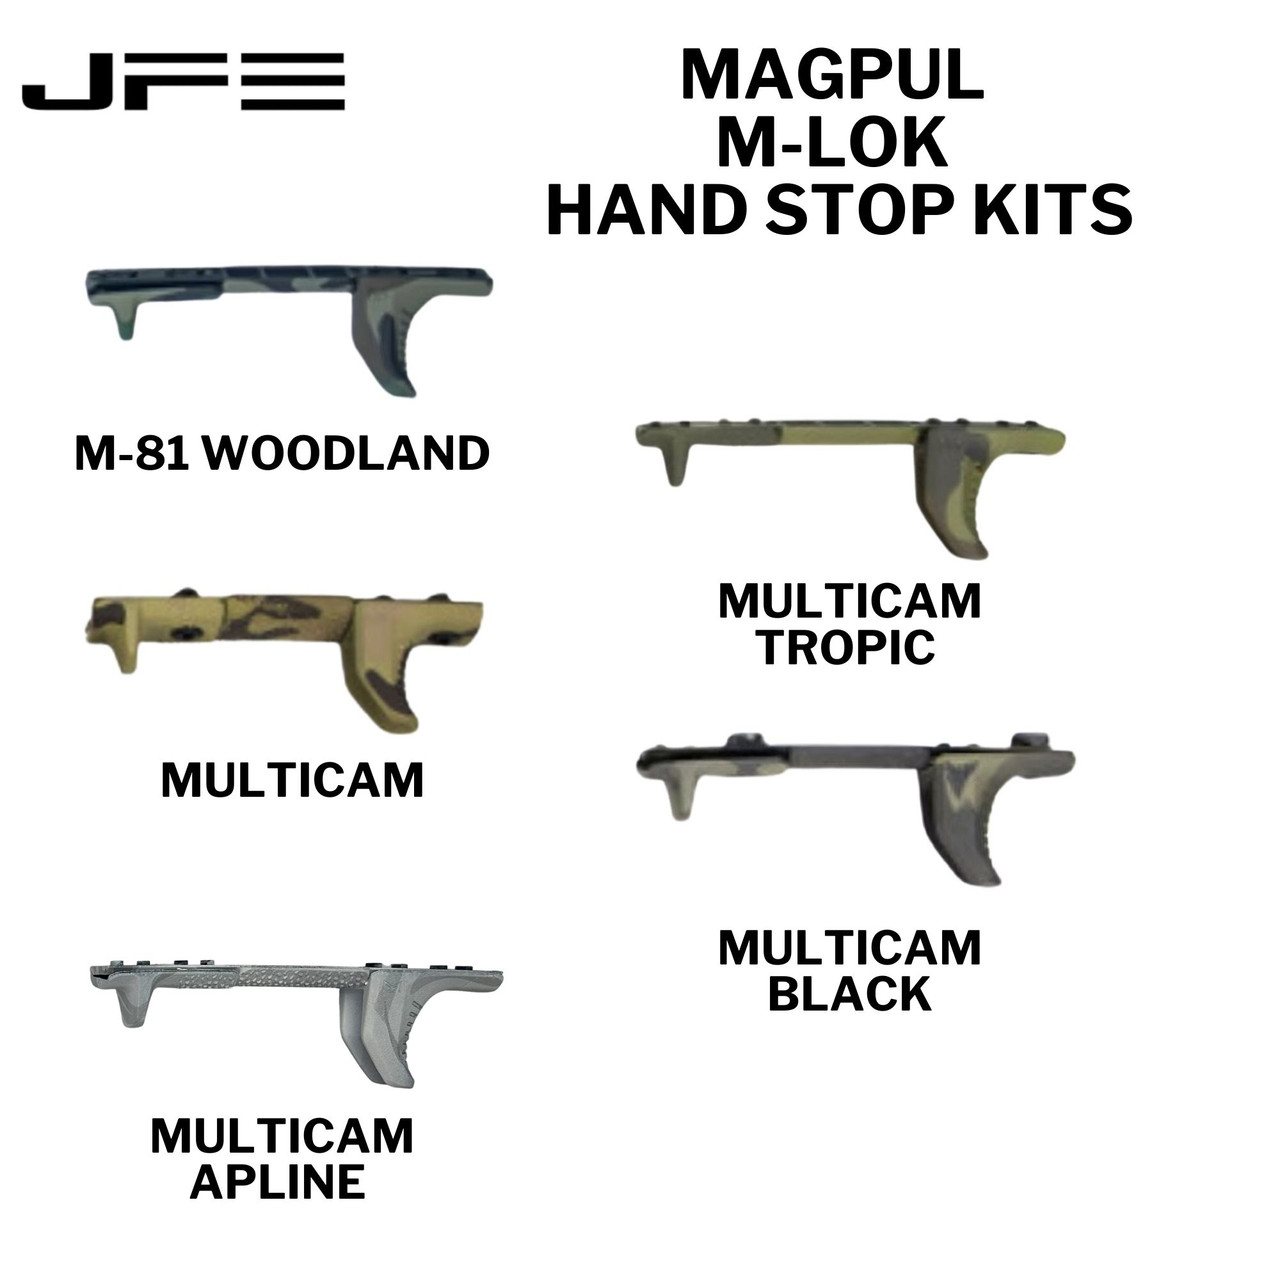 Magpul M-lok Hand Stop Kit low price of $24.95